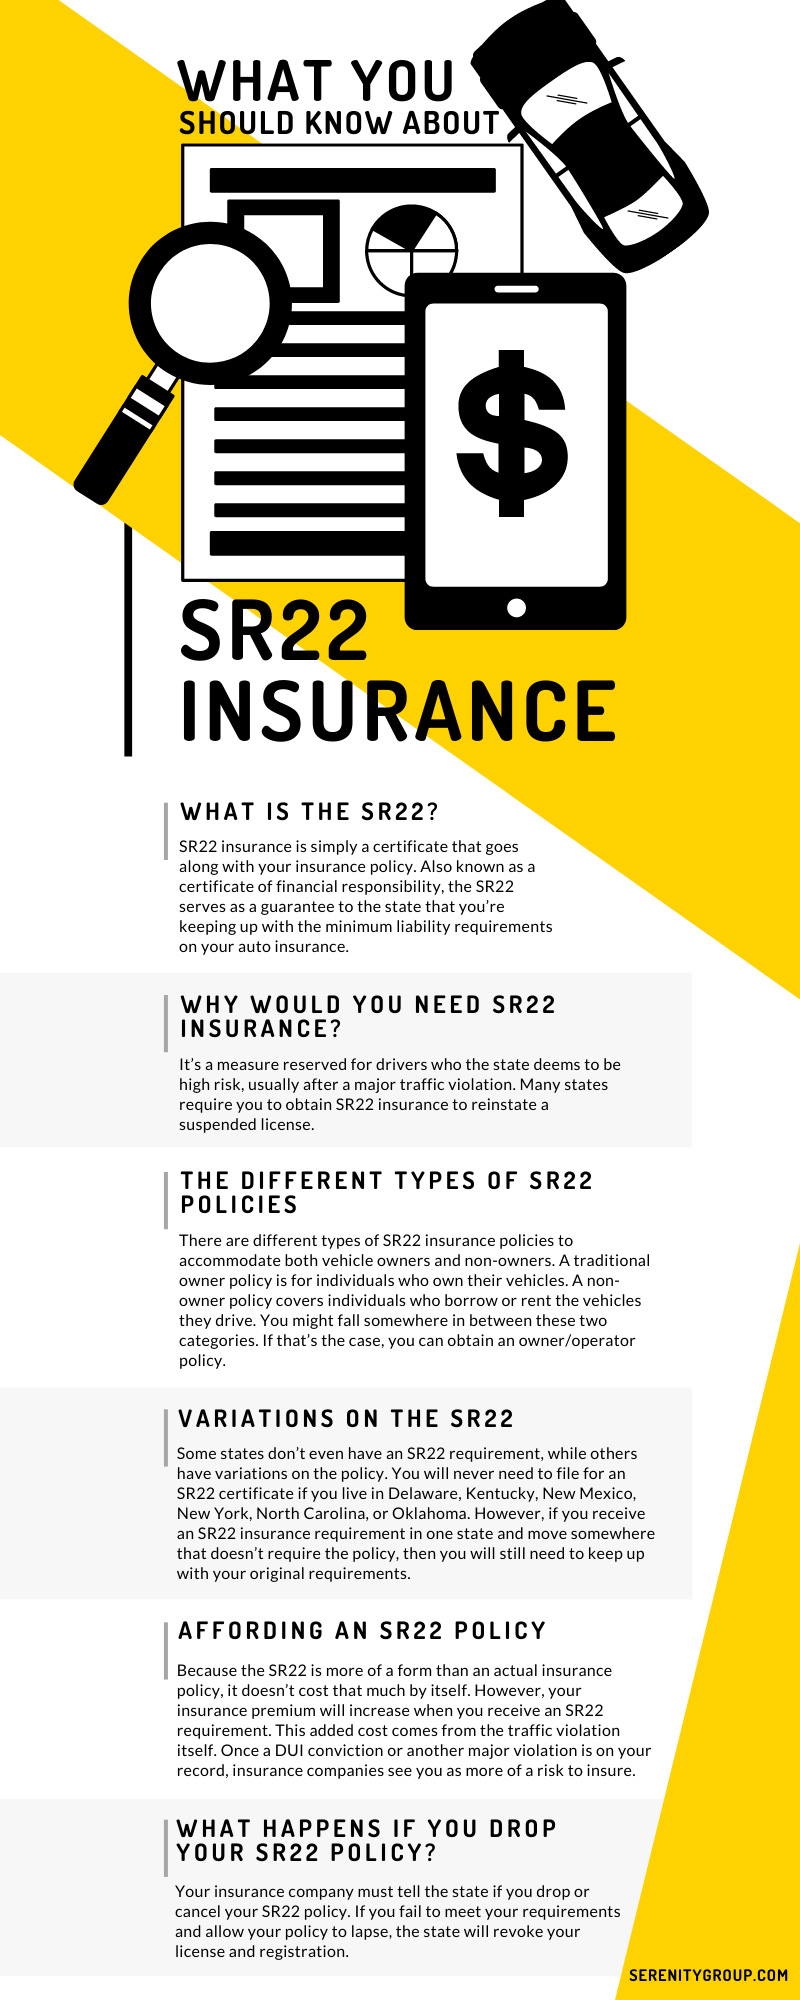 sr22 coverage liability insurance vehicle insurance insurance insurance coverage